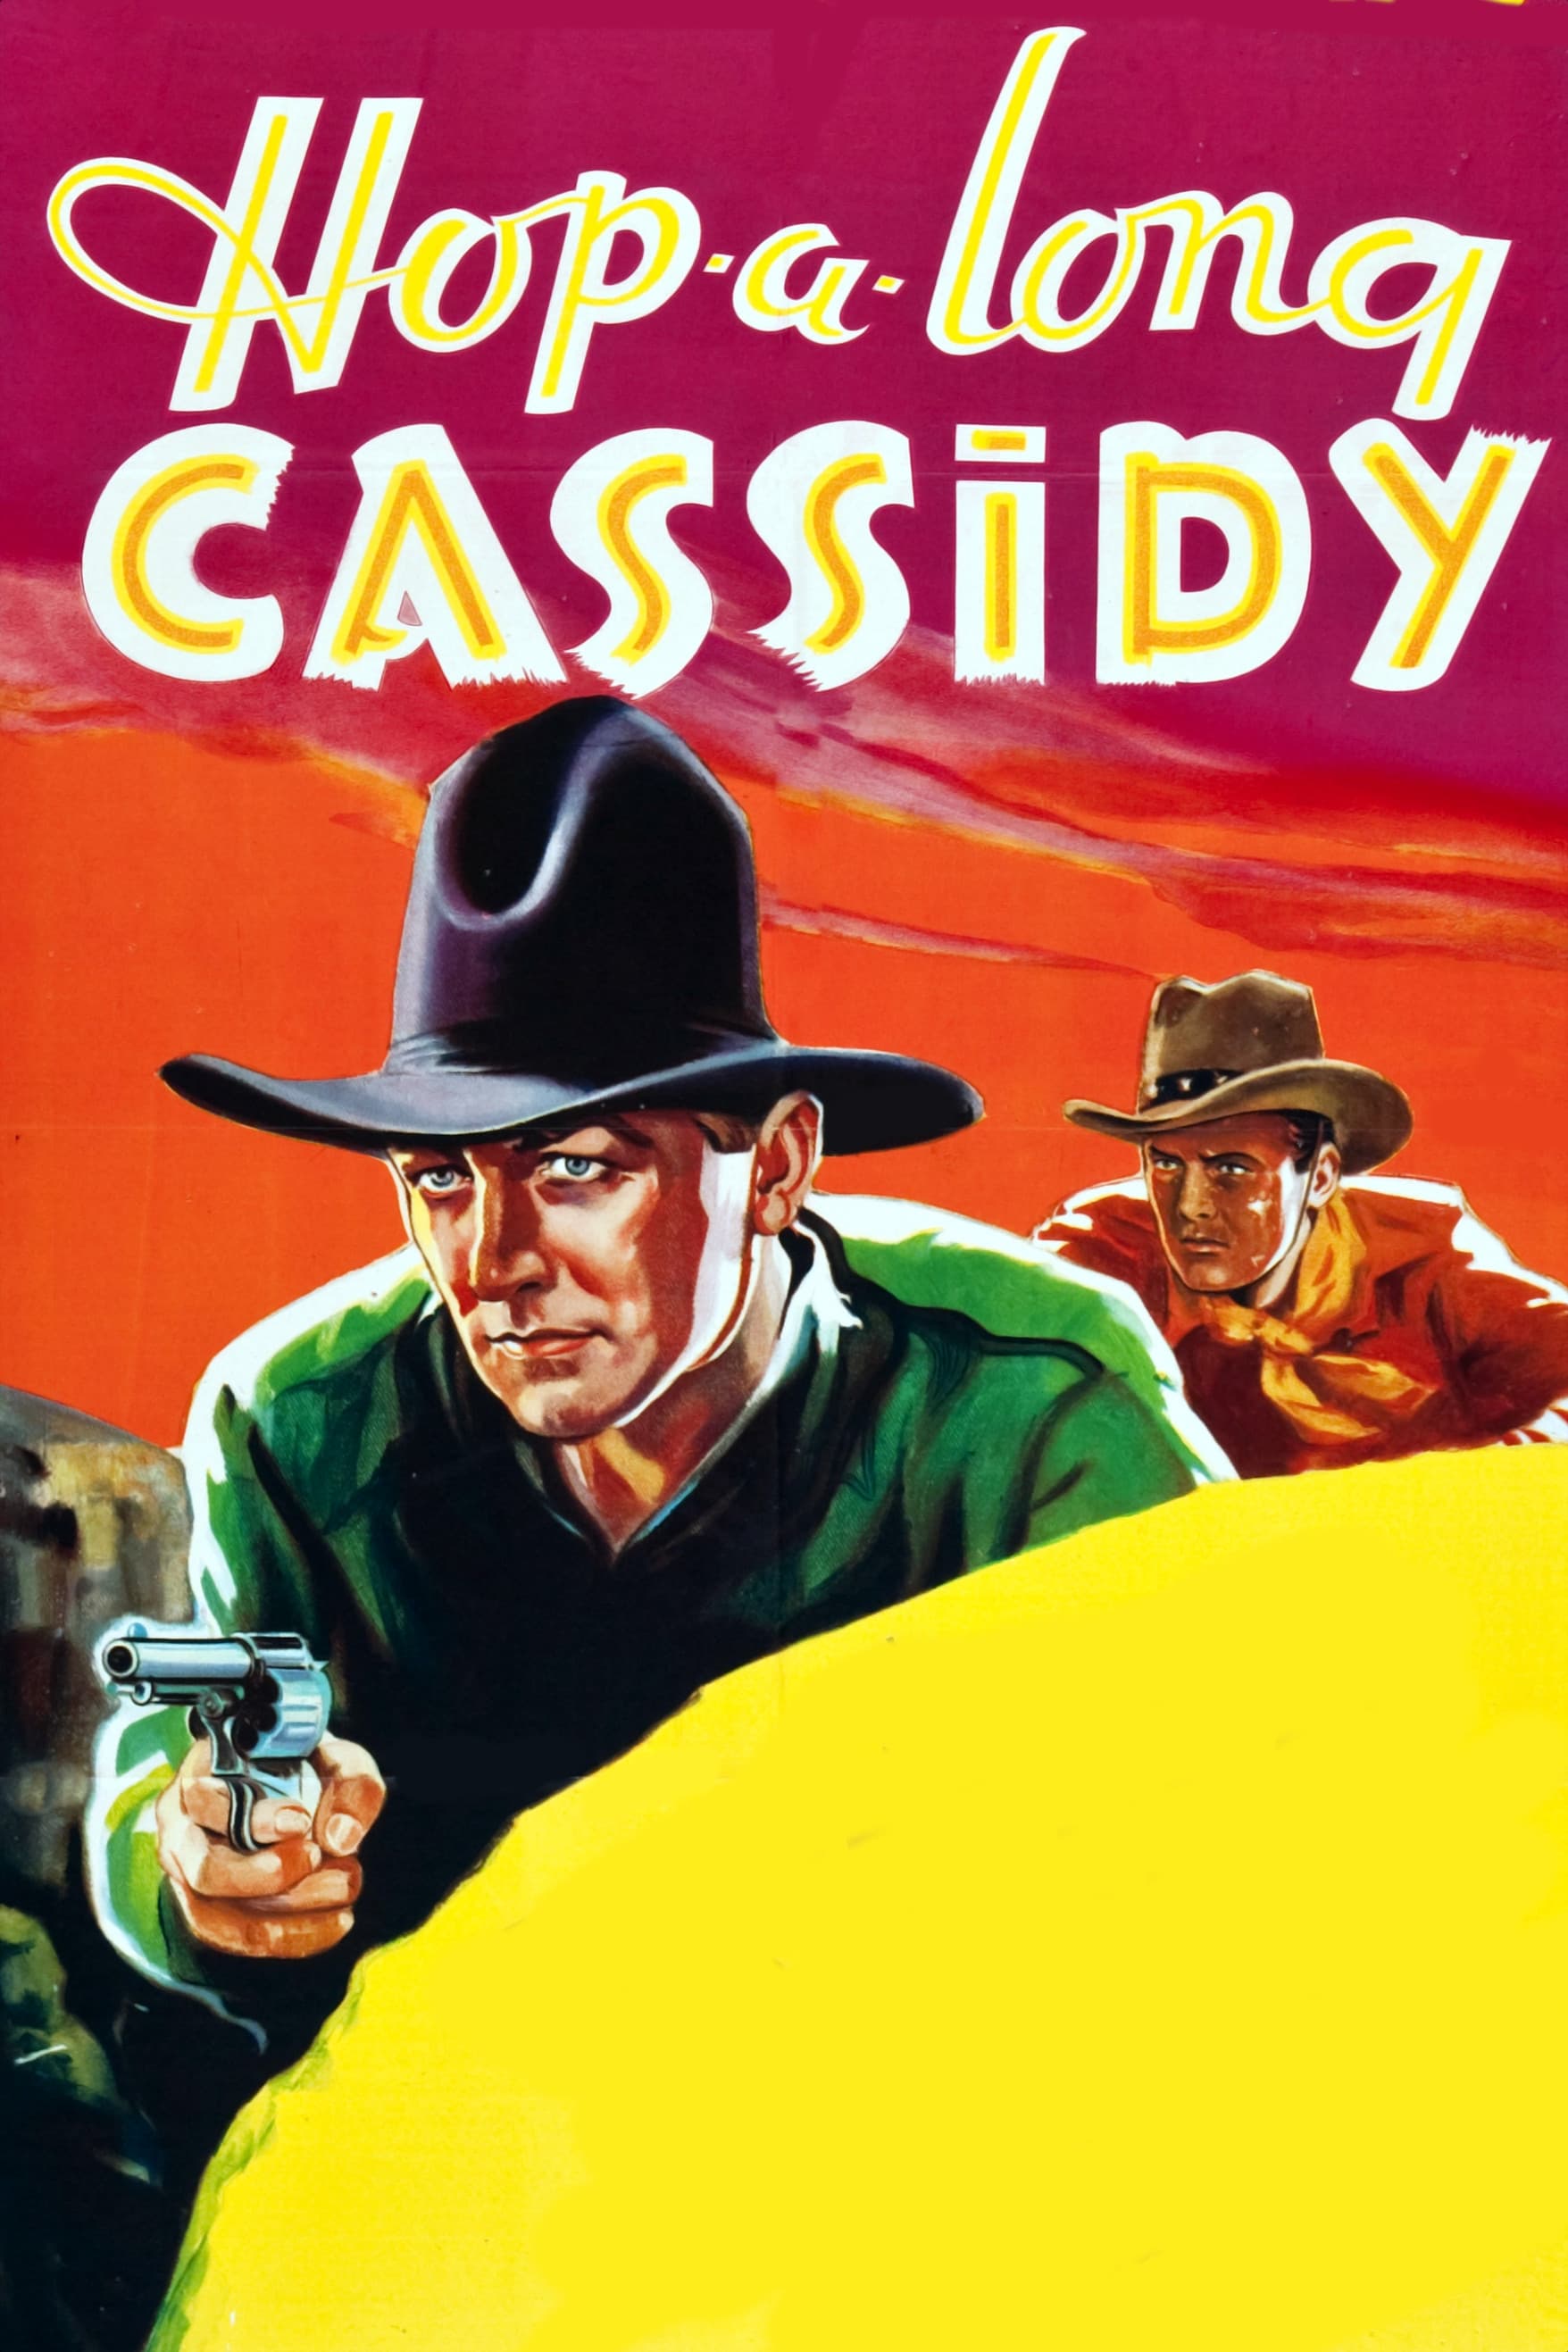 Hop-a-long Cassidy